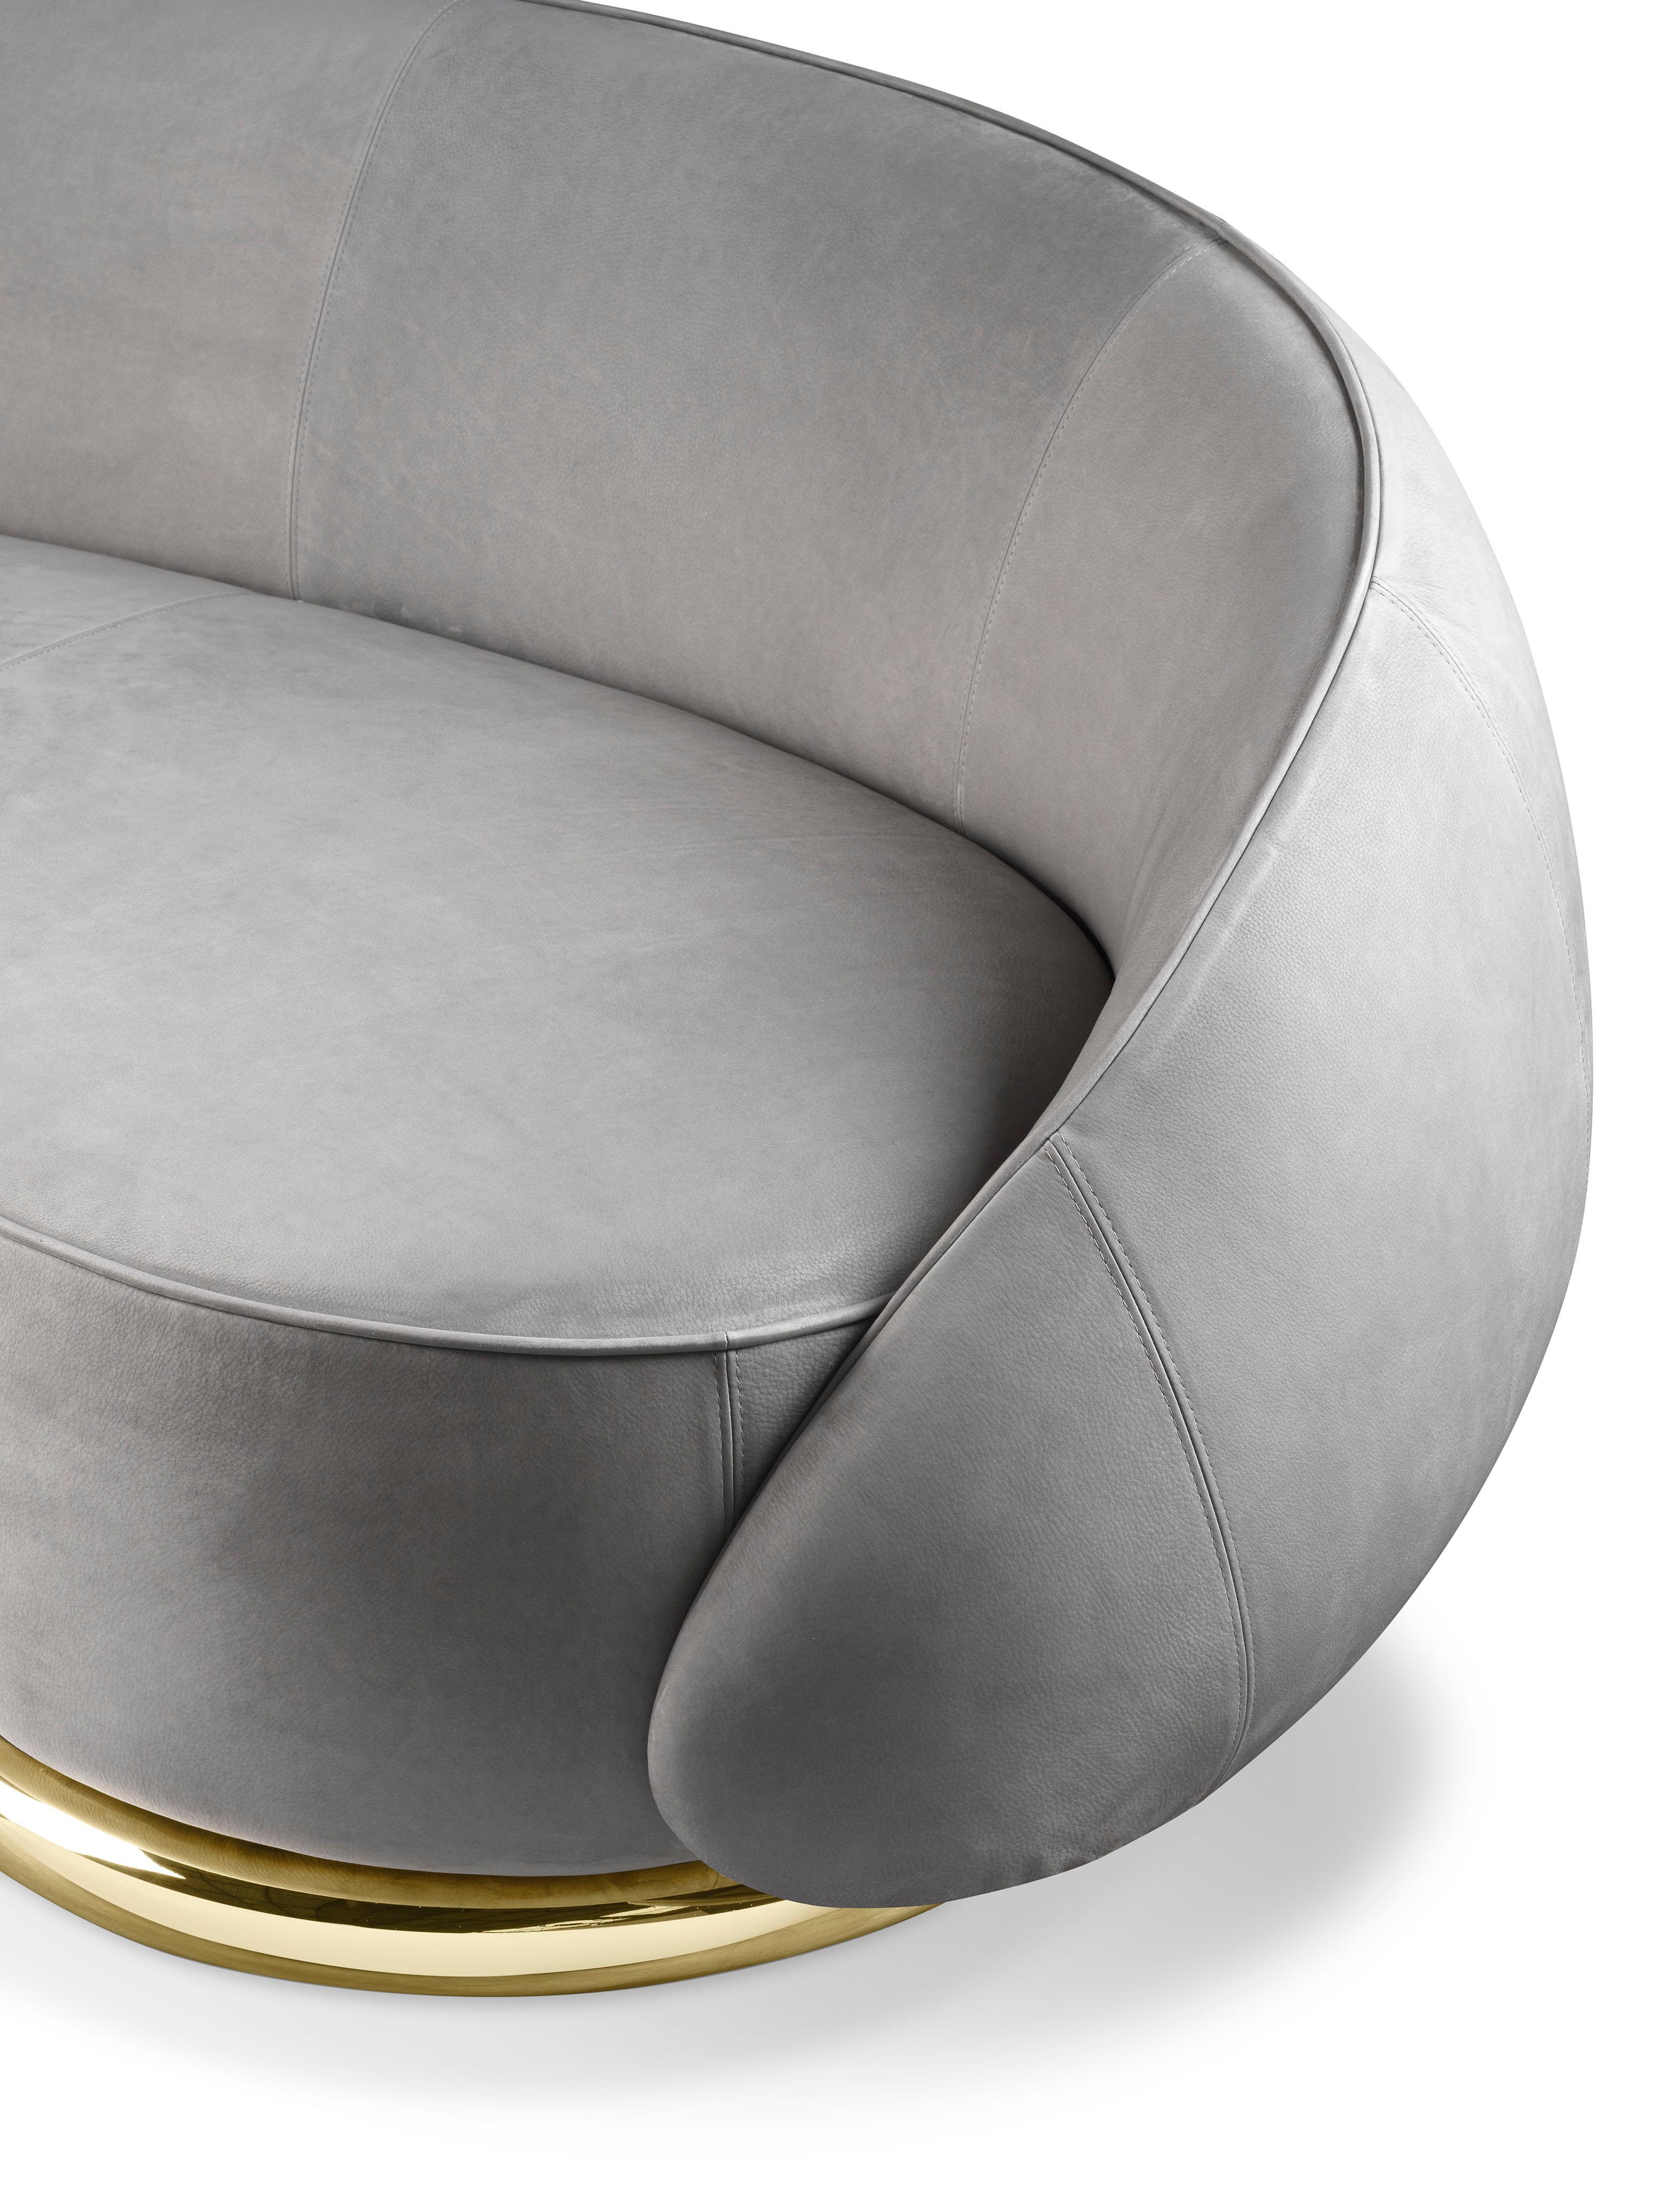 Ghidini 1961 Abbracci 3-Seat Sofa in Grey Leather and Brass Base by L. Bozzoli In New Condition For Sale In Villa Carcina, IT